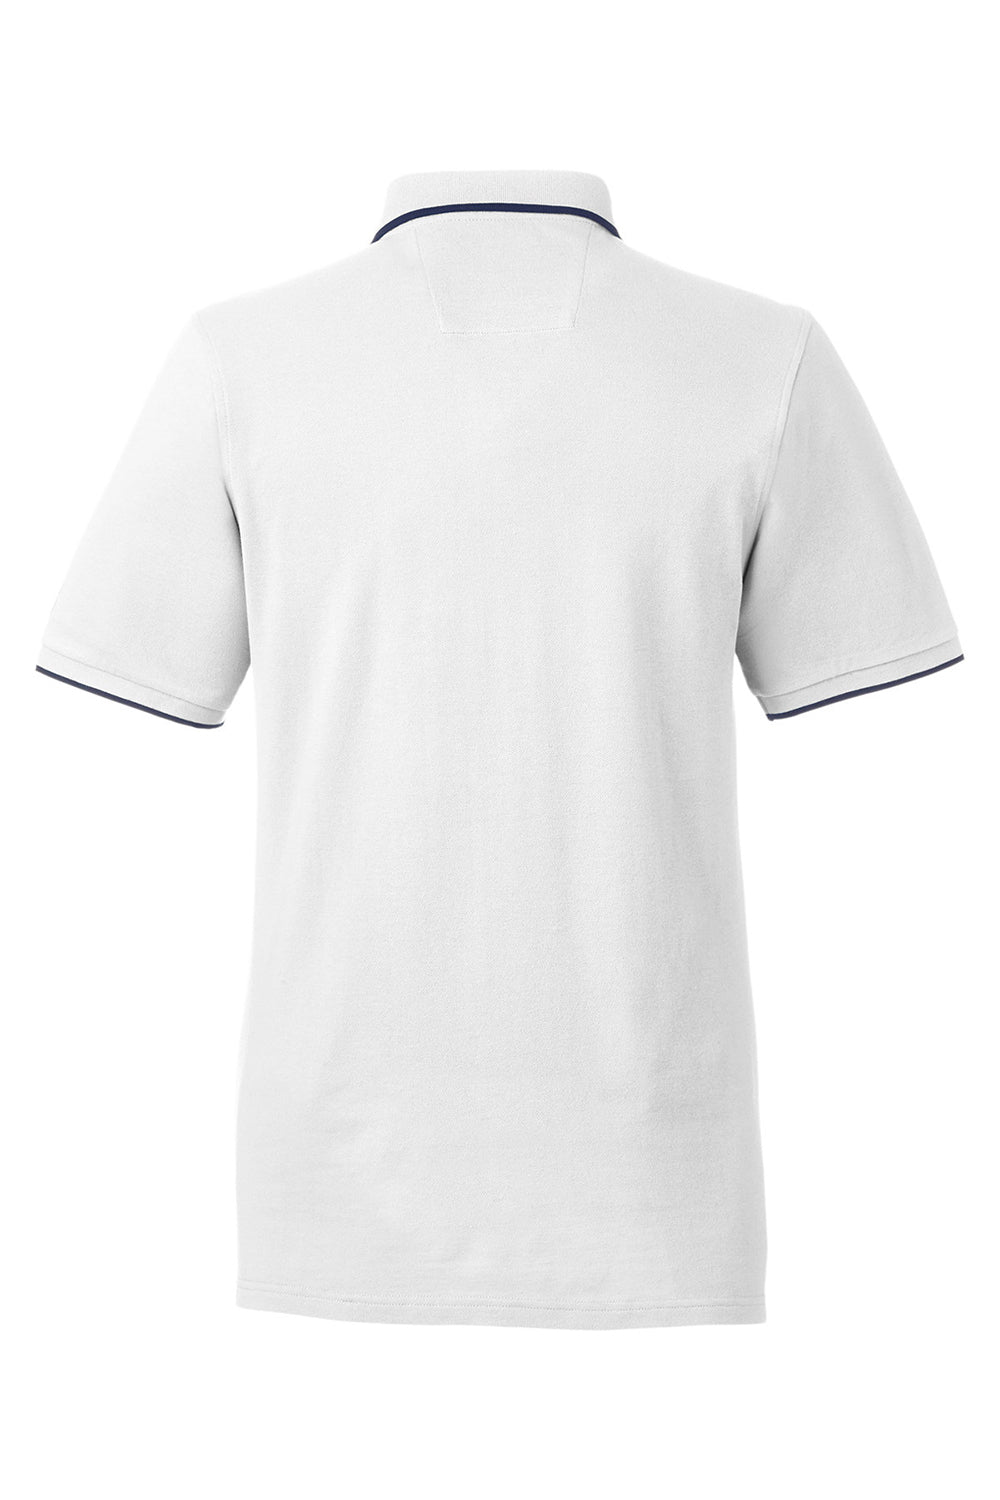 Nautica N17165 Mens Desk Short Sleeve Polo Shirt White/Navy Blue Flat Back